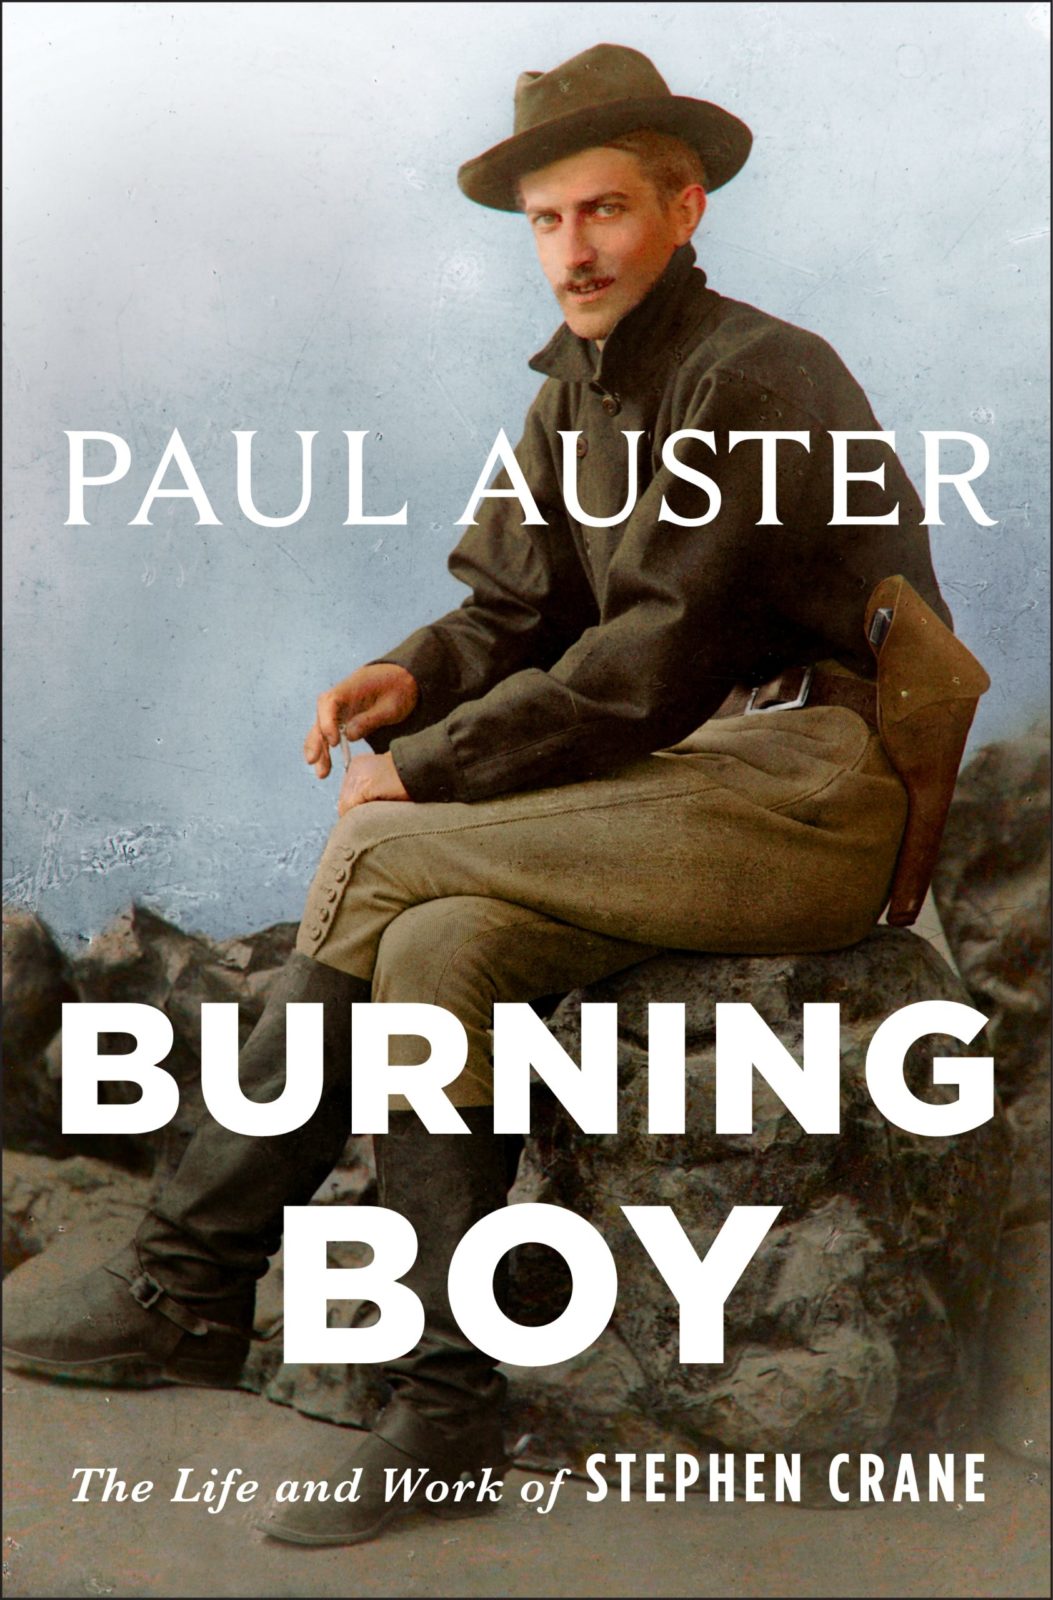 Paul Auster (Official)